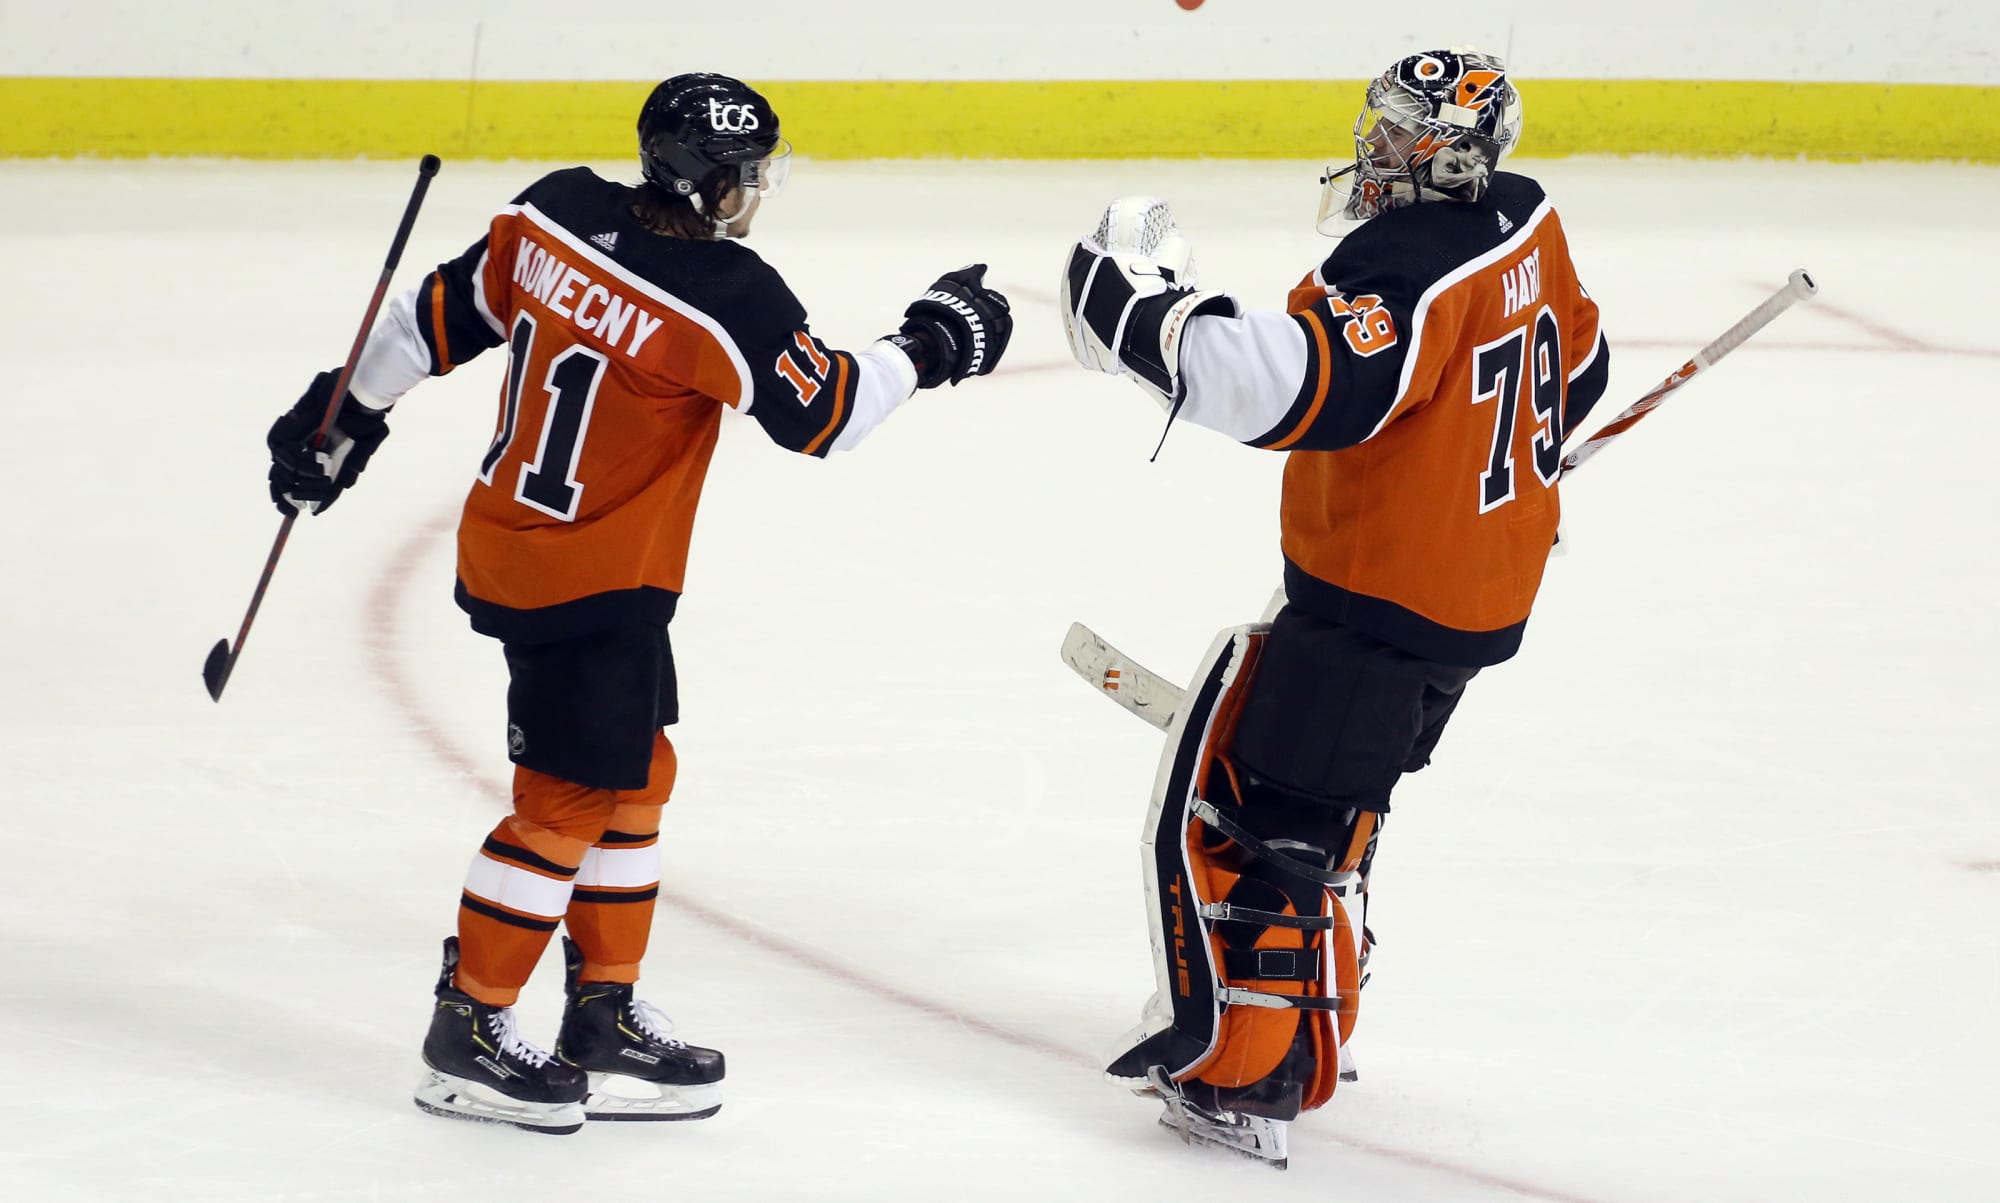 Flyers Reverse Retro jerseys honor Stanley Cup teams, include Cooperalls